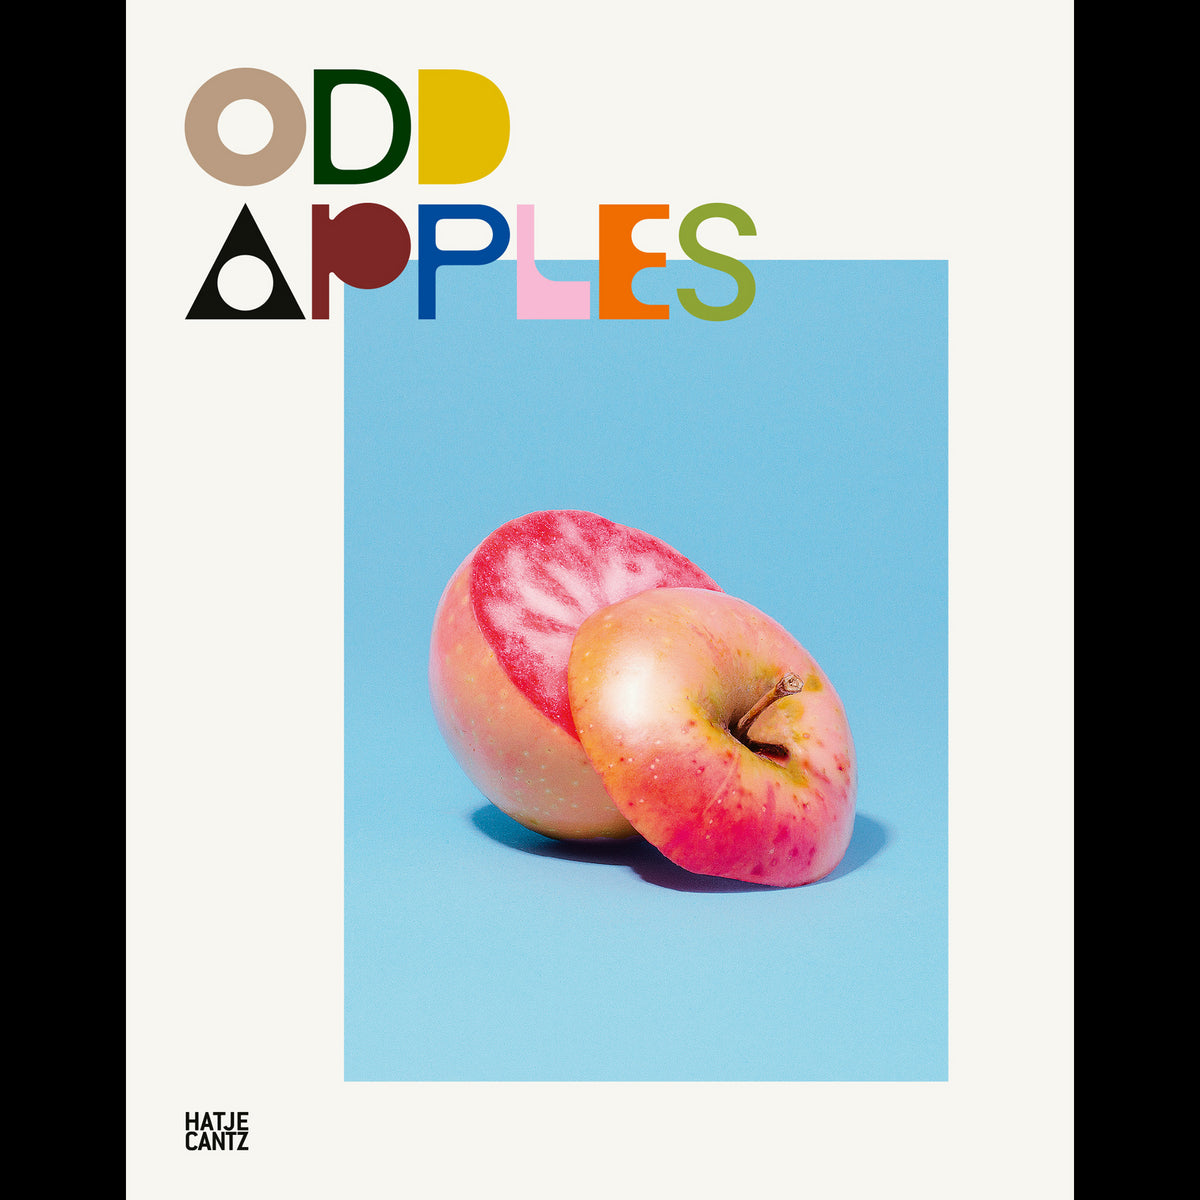 Coverbild Odd Apples